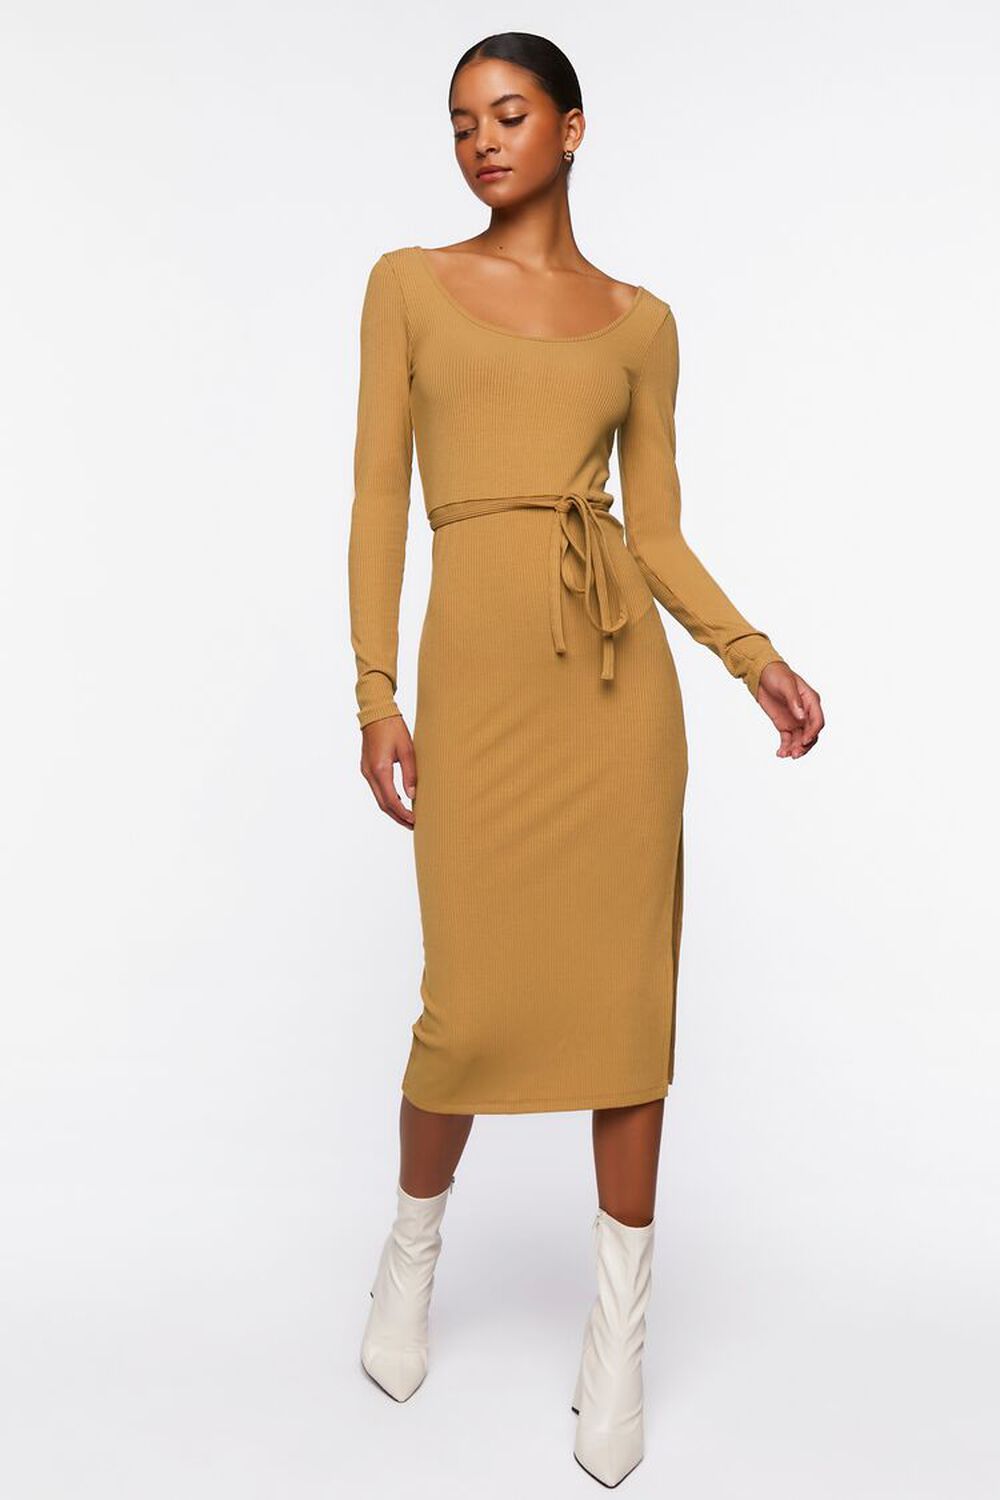 CAMEL Tie-Waist Slit Midi Dress, image 1